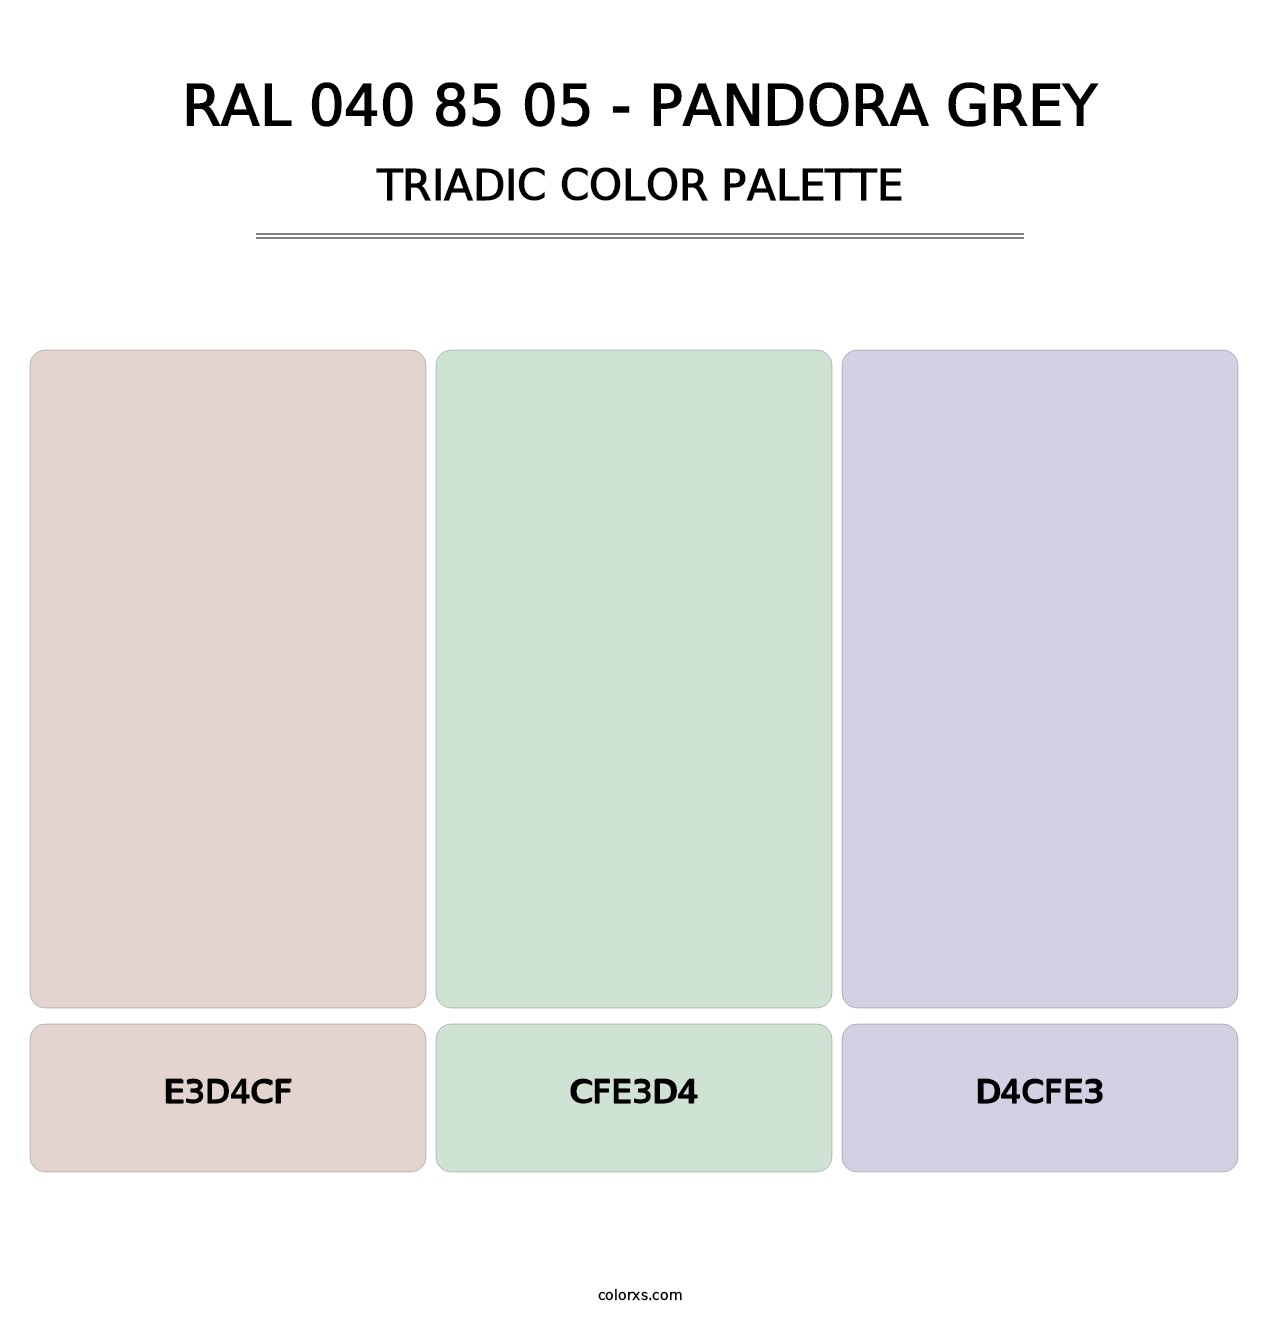 RAL 040 85 05 - Pandora Grey - Triadic Color Palette